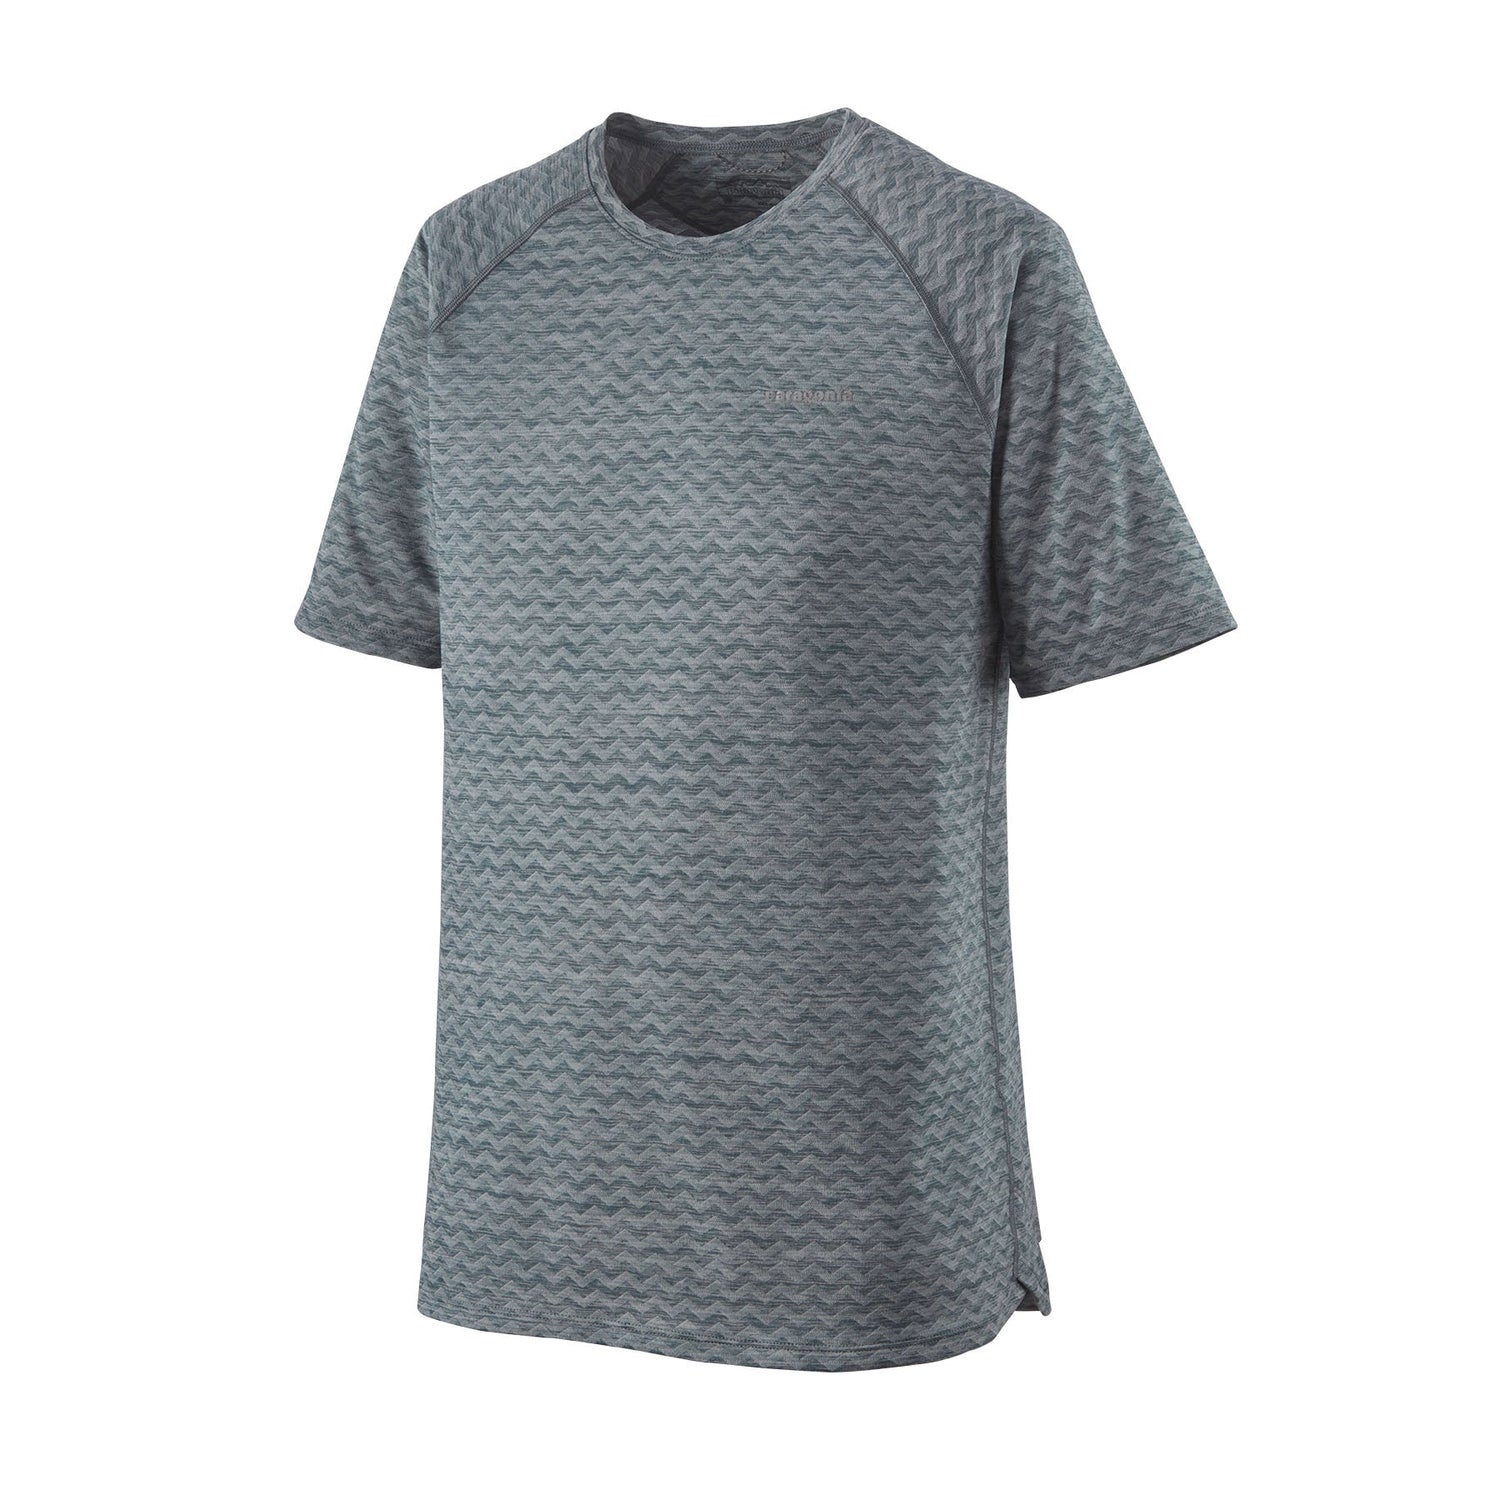 Patagonia - M's Ridge Flow Running Shirt - 100% Recycled Polyester - Weekendbee - sustainable sportswear